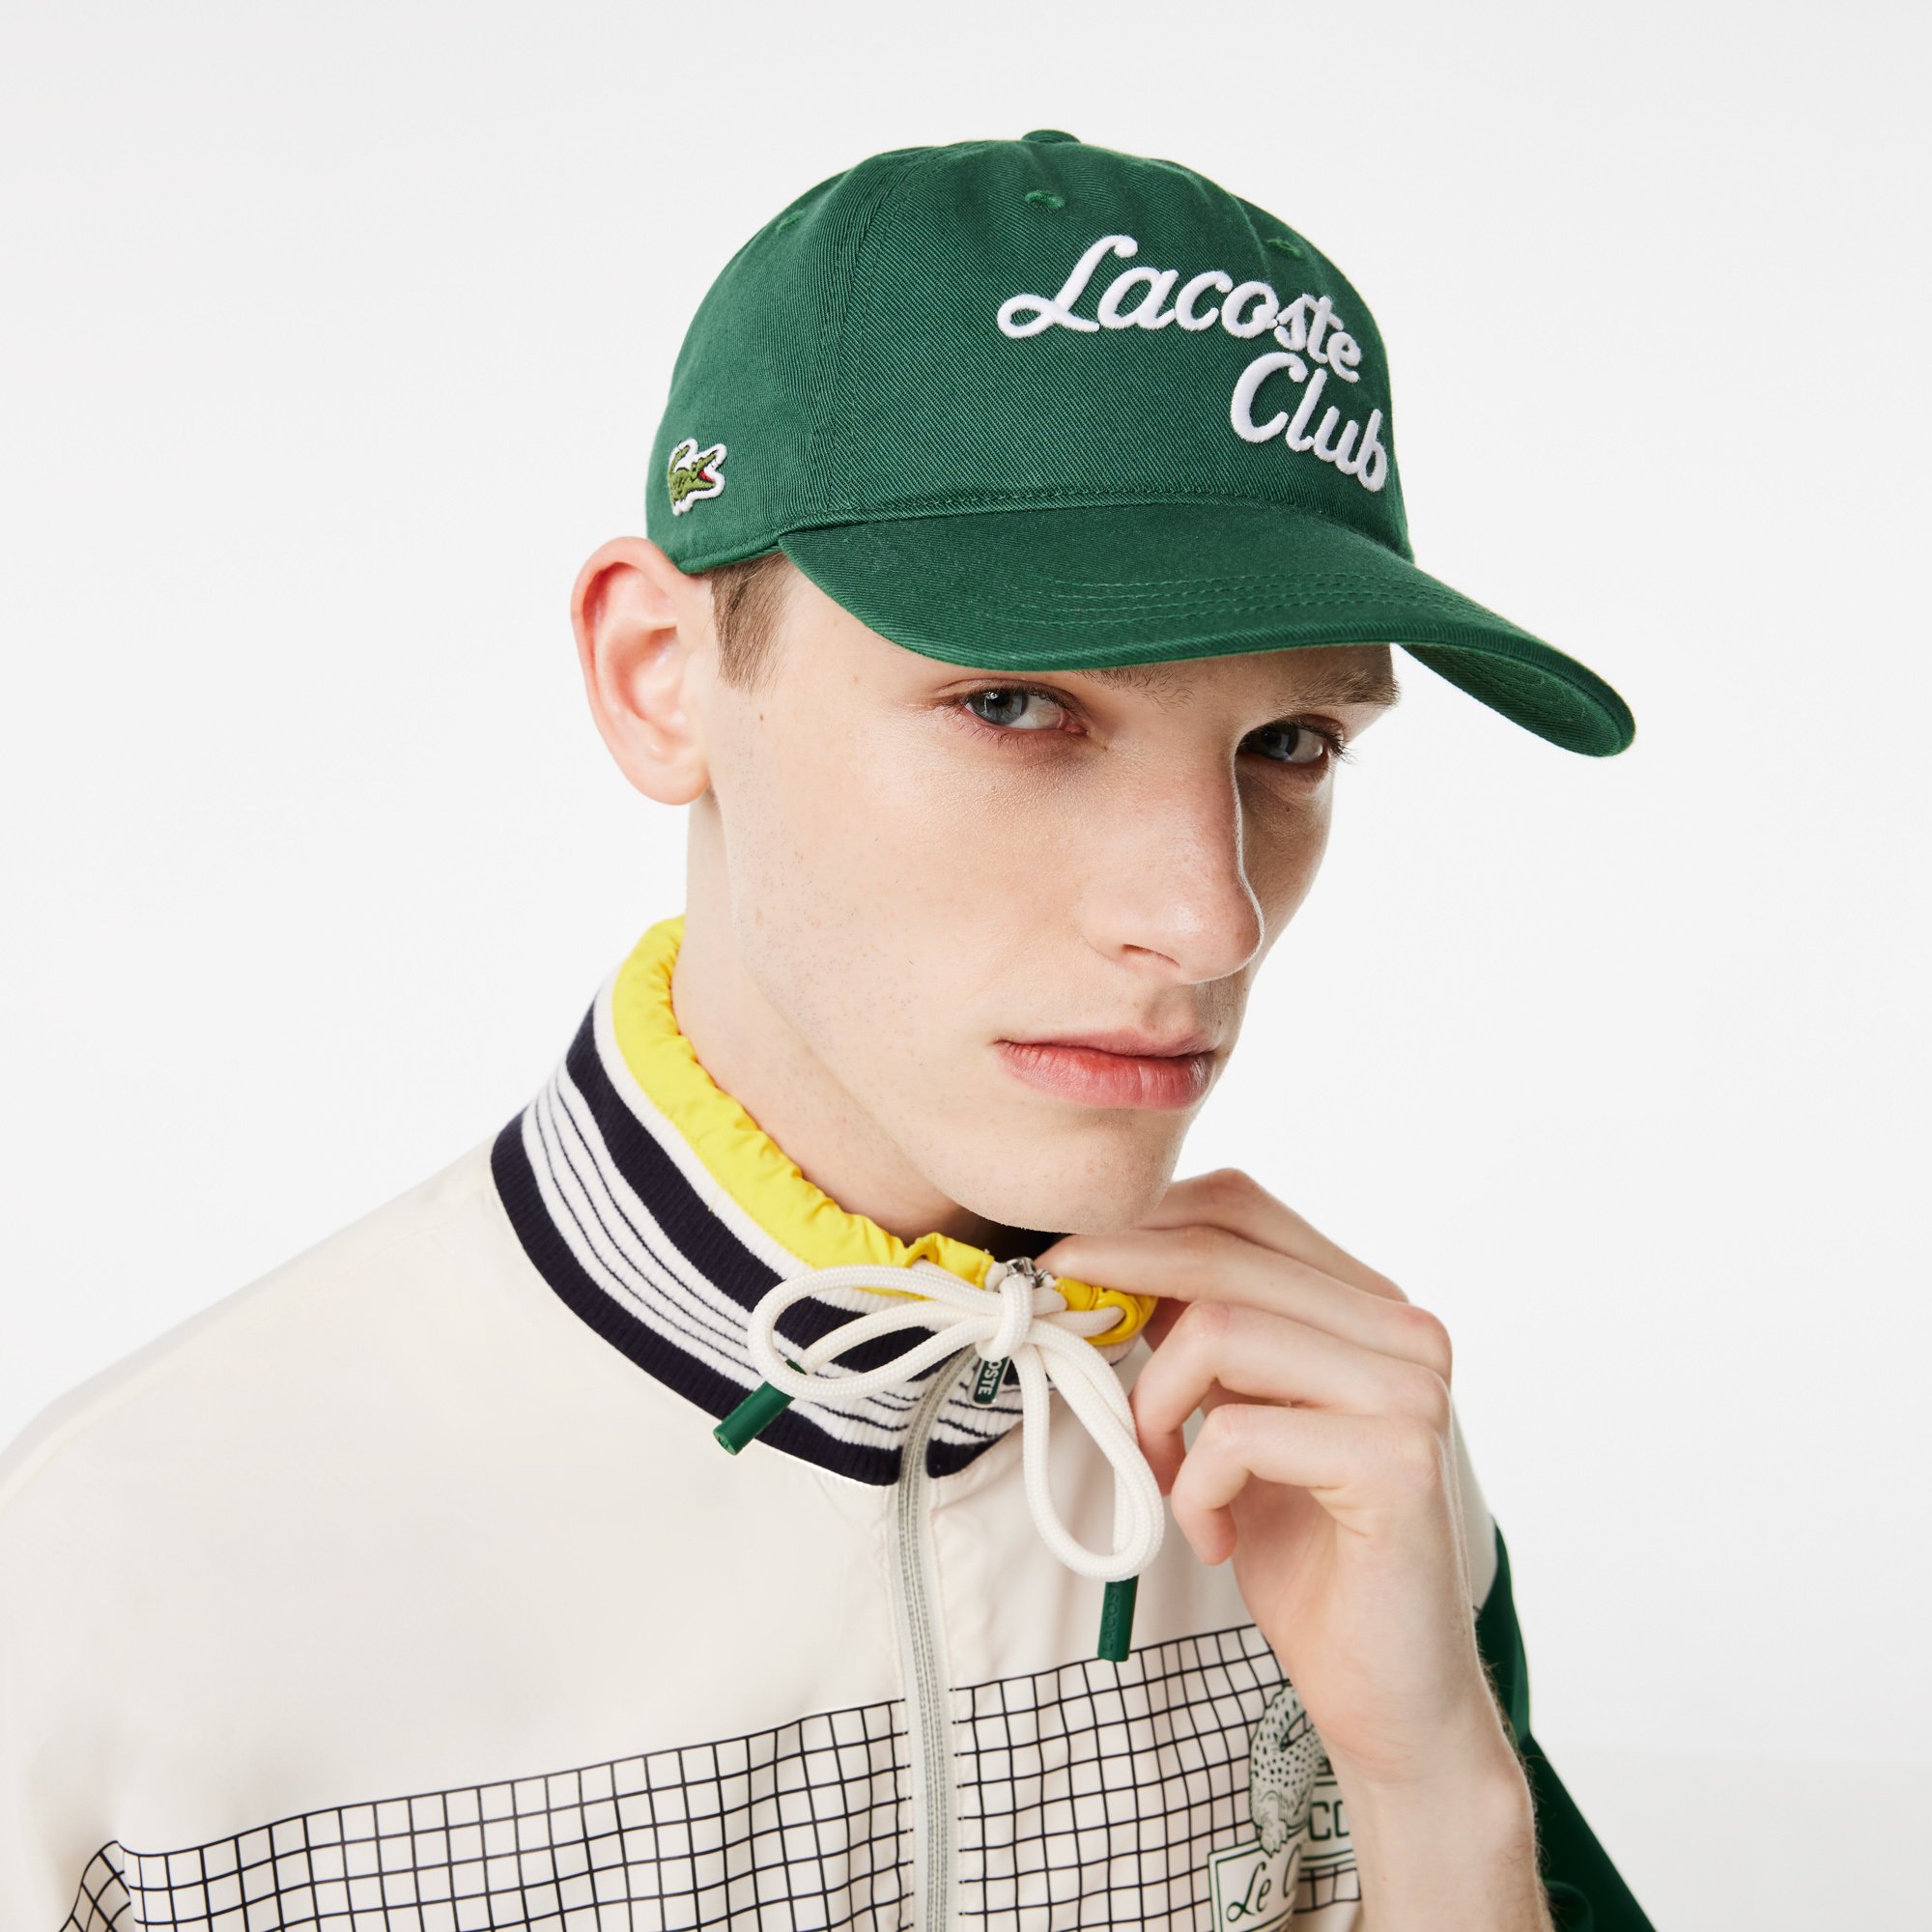 Lacoste men's cap for Roland Garros - Green | Roland-Garros Store